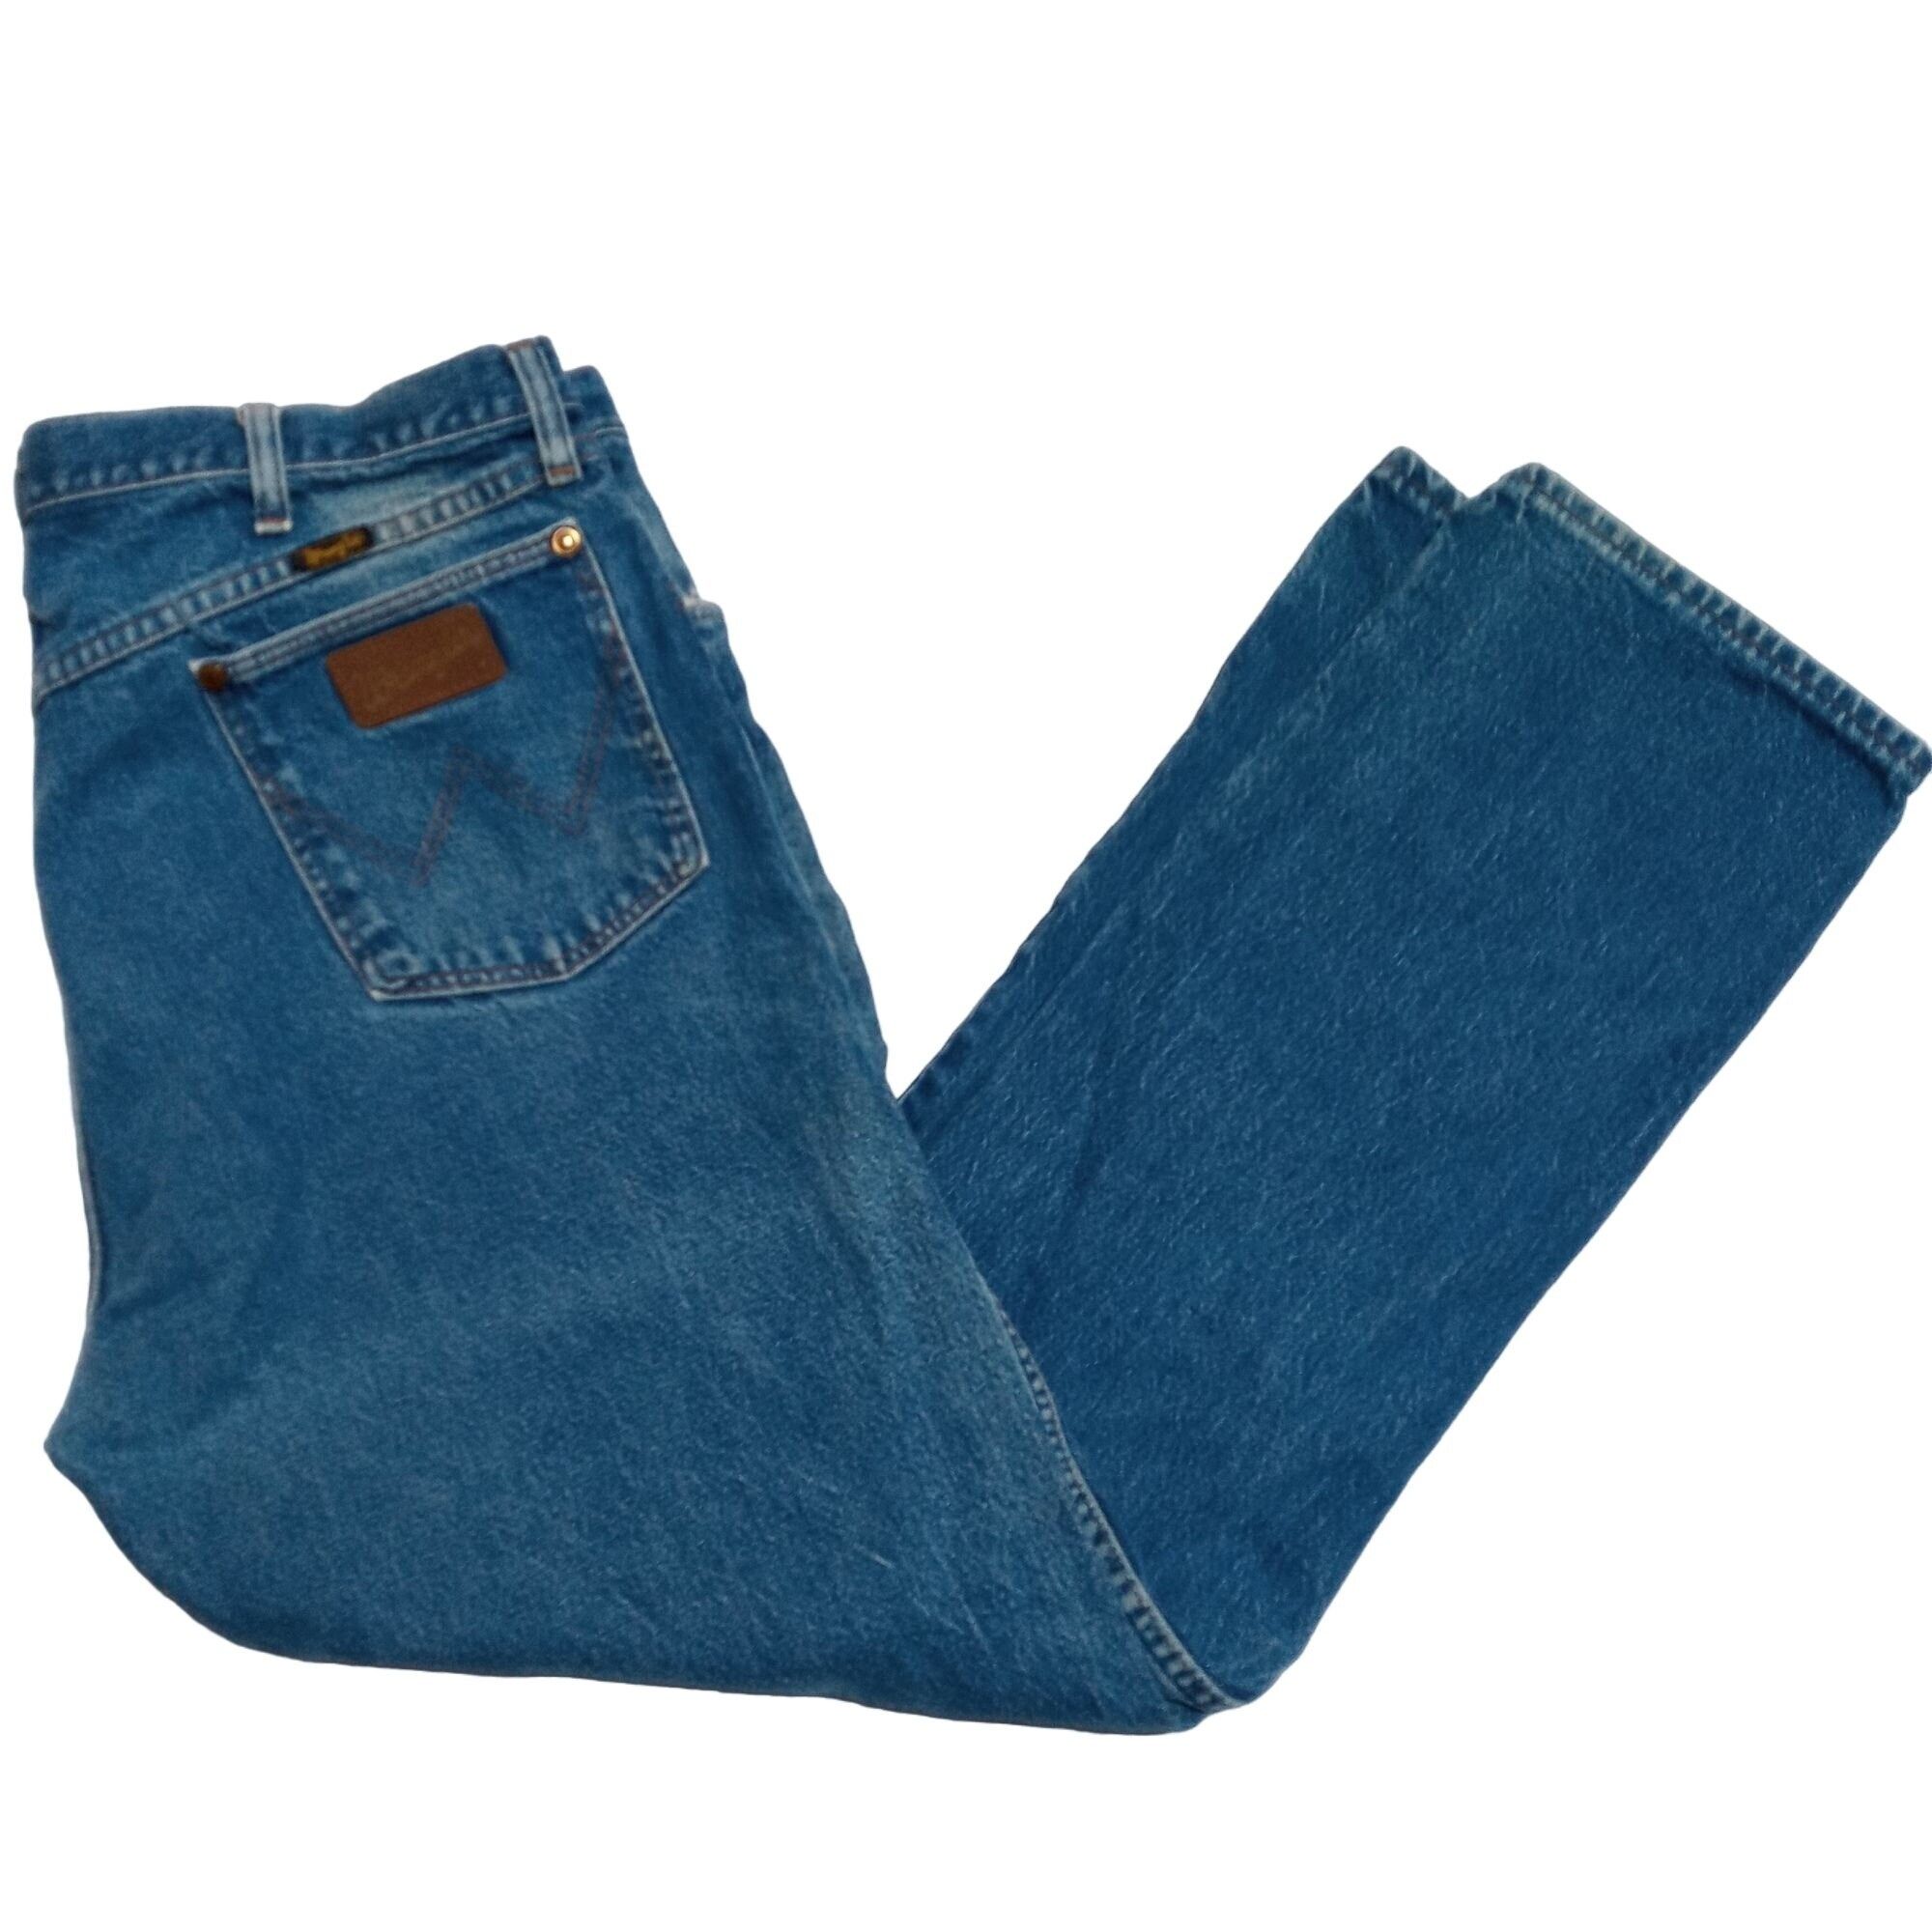 Wrangler Vintage Wrangler Mens Blue Jeans 37 x 28 Faded Worn Denim Co Size US 37 - 1 Preview